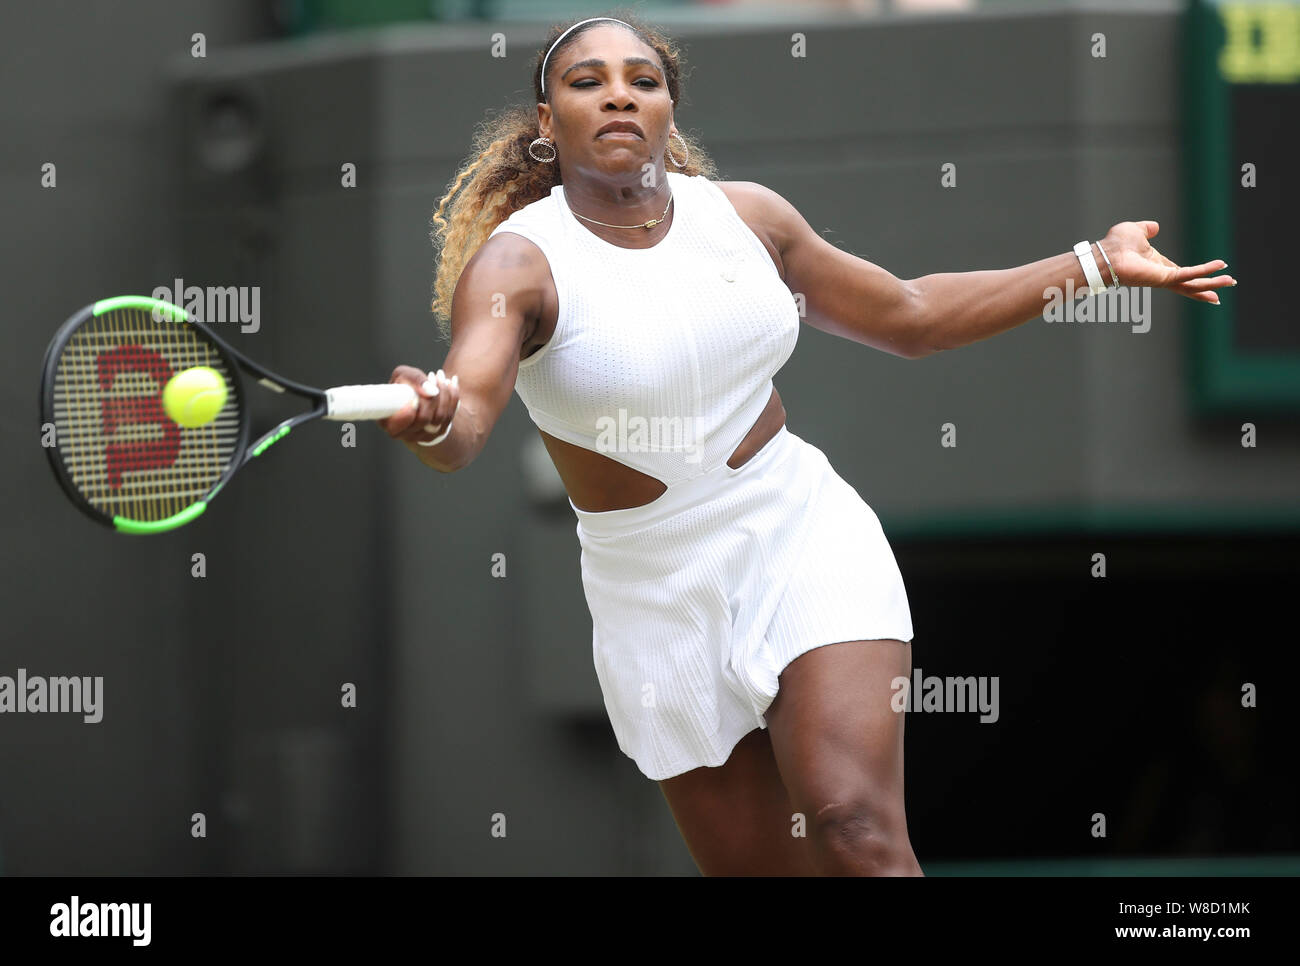 American tennis player Serena Williams playing forehand shot during 2019  Wimbledon Championships, London, England, United Kingdom Stock Photo - Alamy